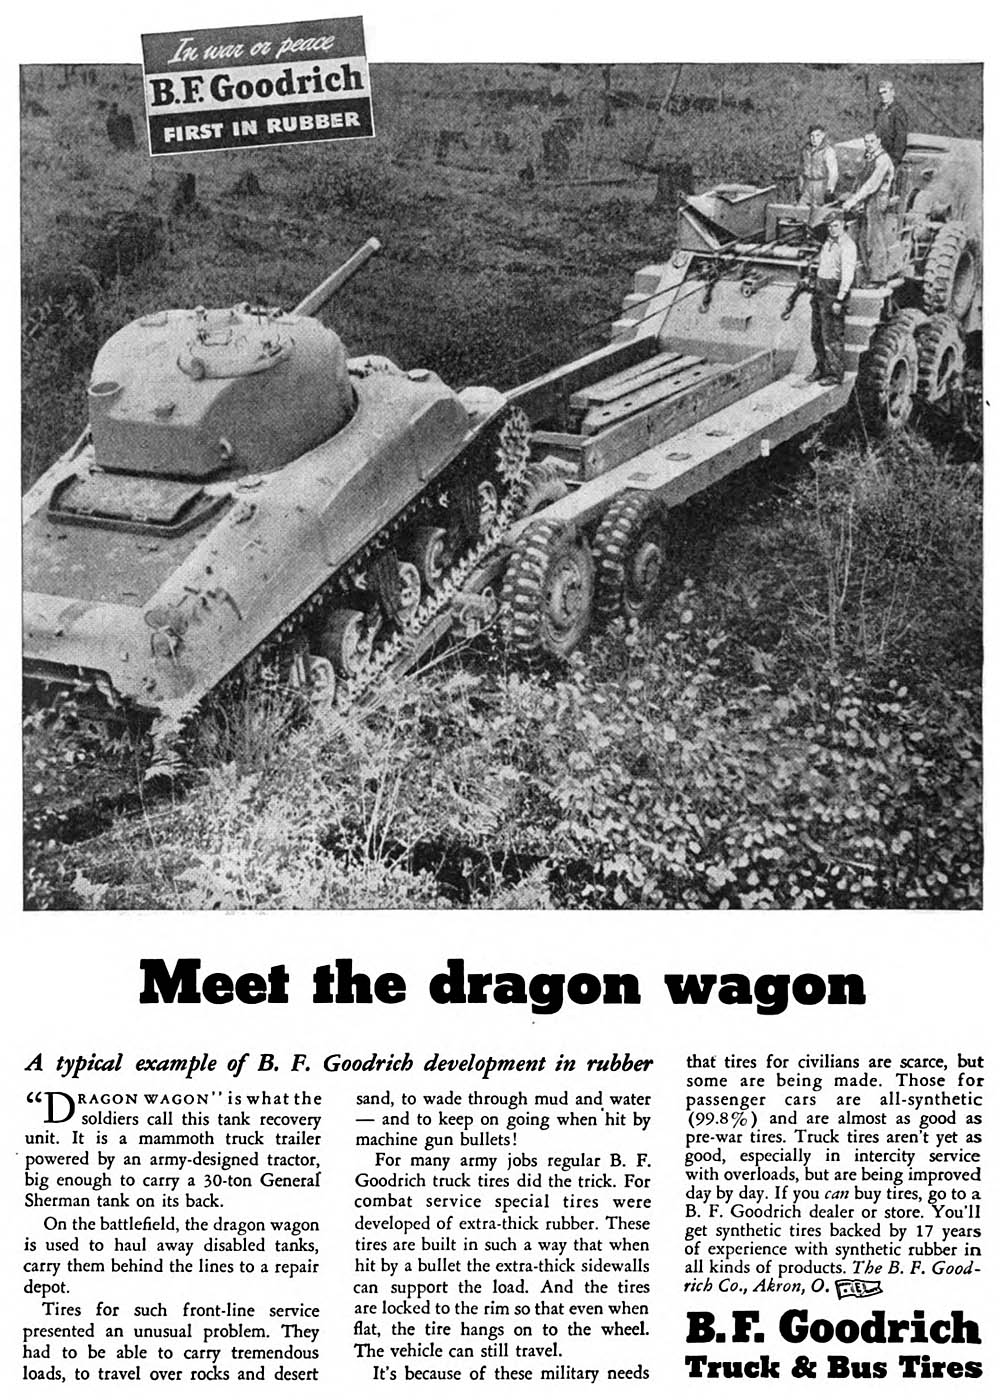 Meet the Dragon Wagon